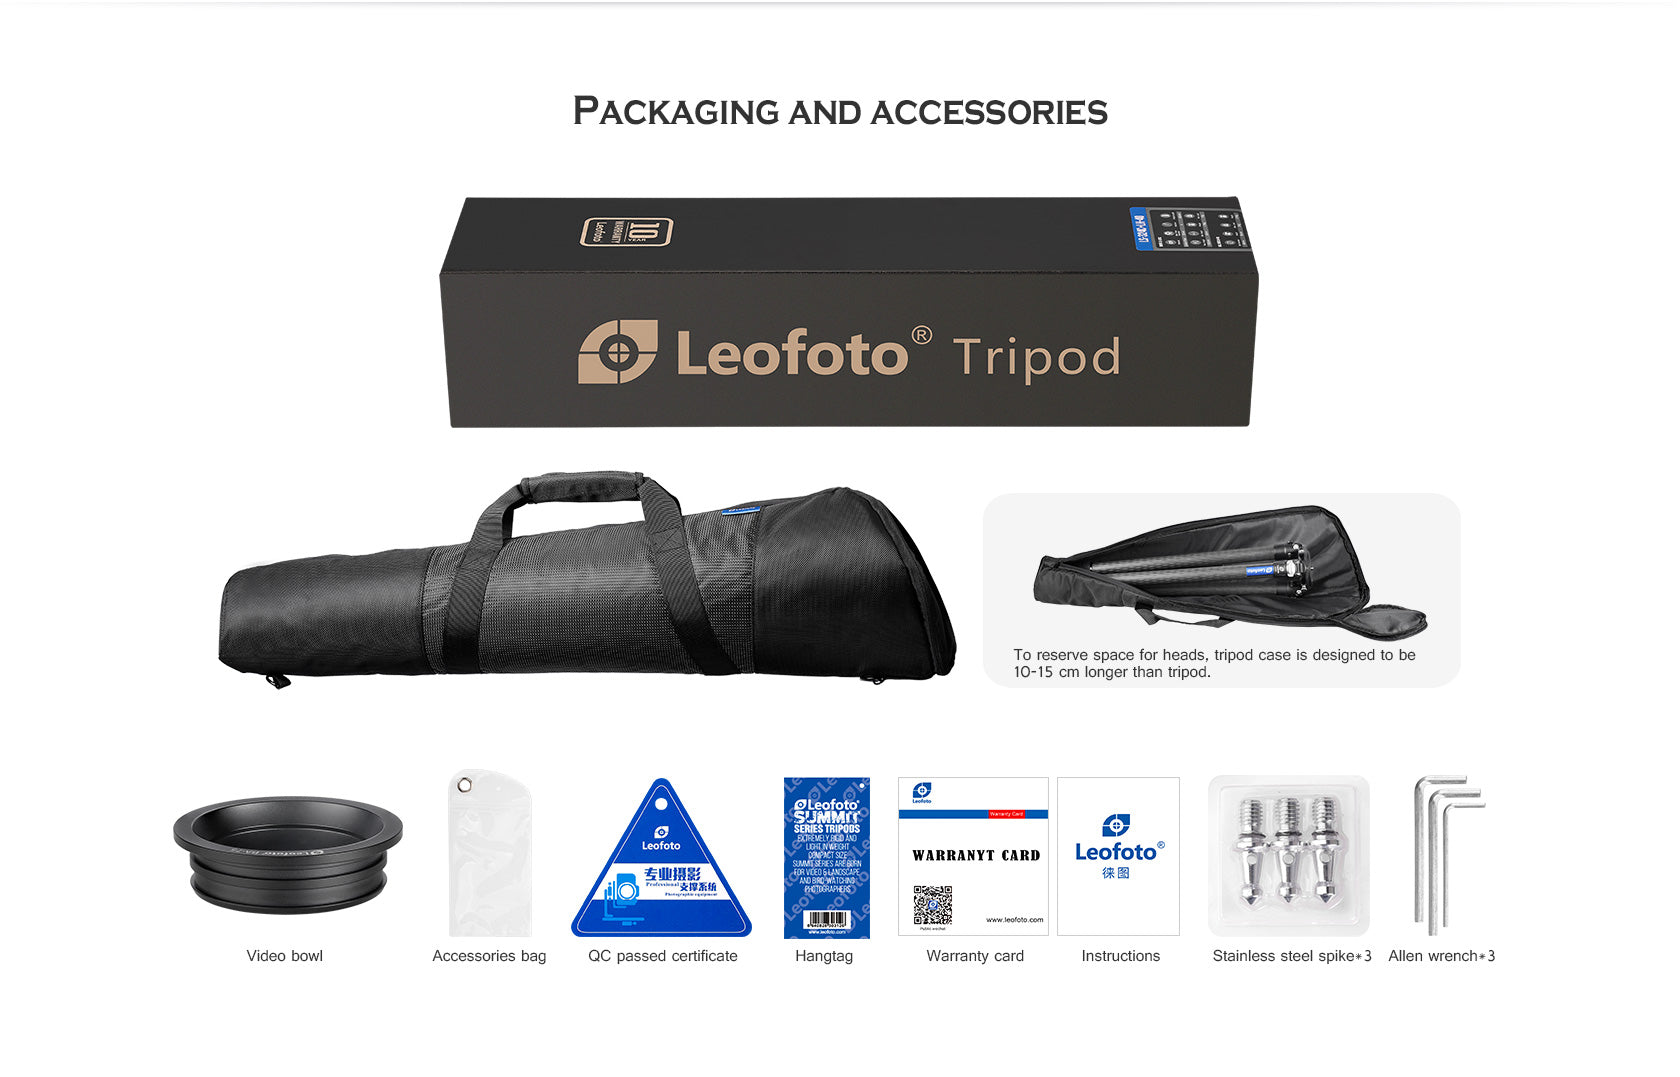 Leofoto LM-364CL(Long) Tripod with 75mm Video Bowl+Platform and Bag